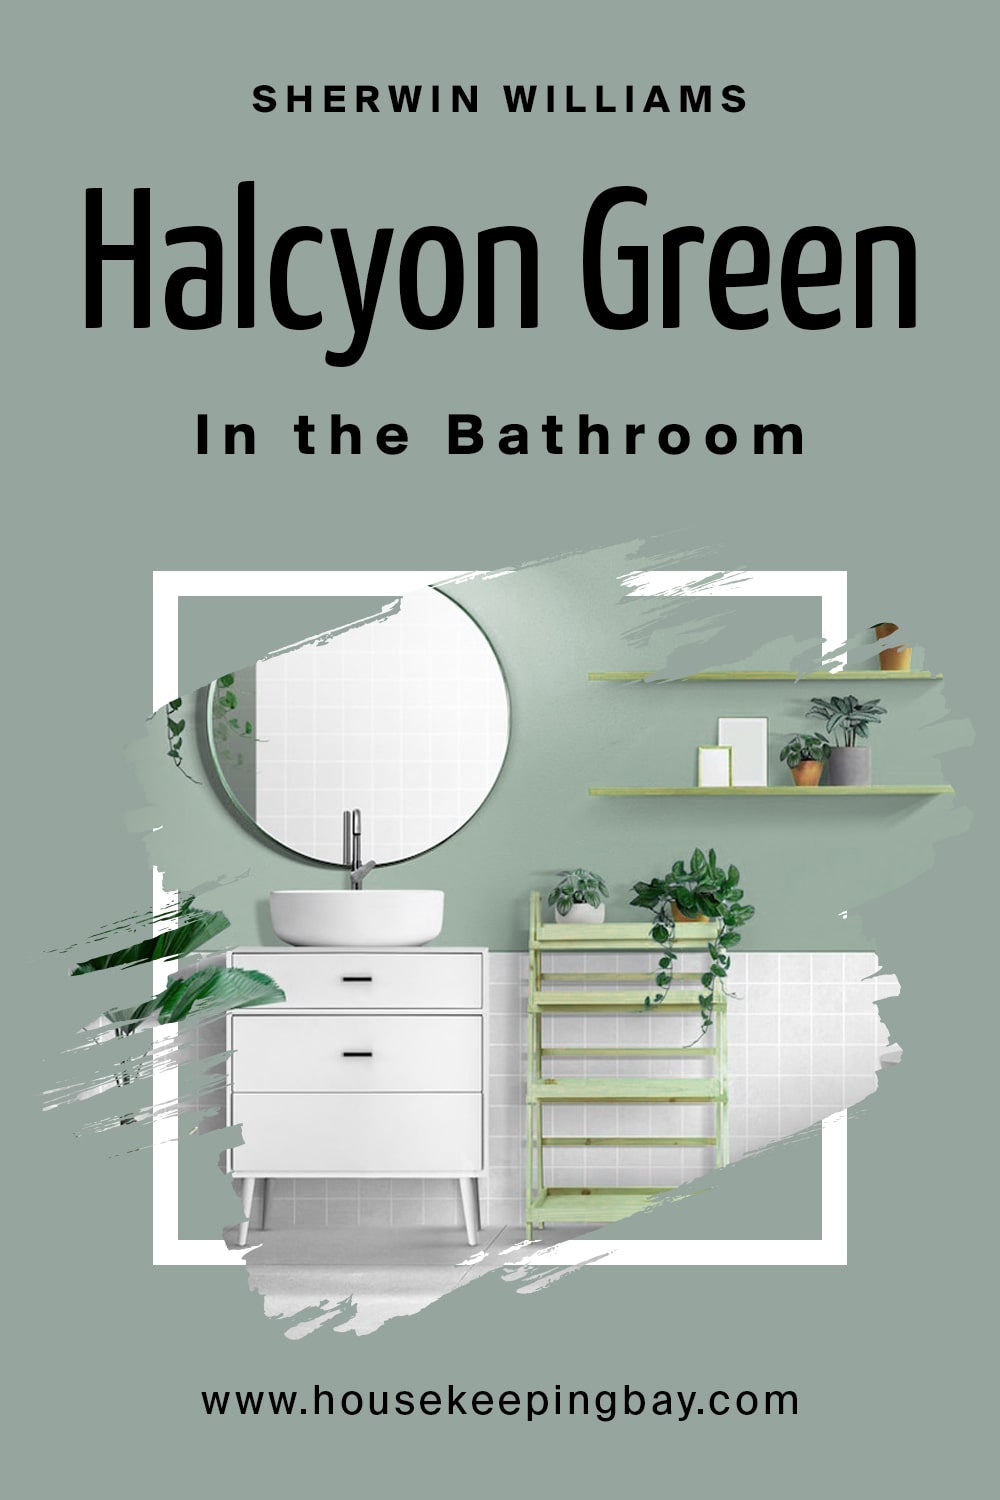 Sherwin Williams. Halcyon Green In the Bathroom